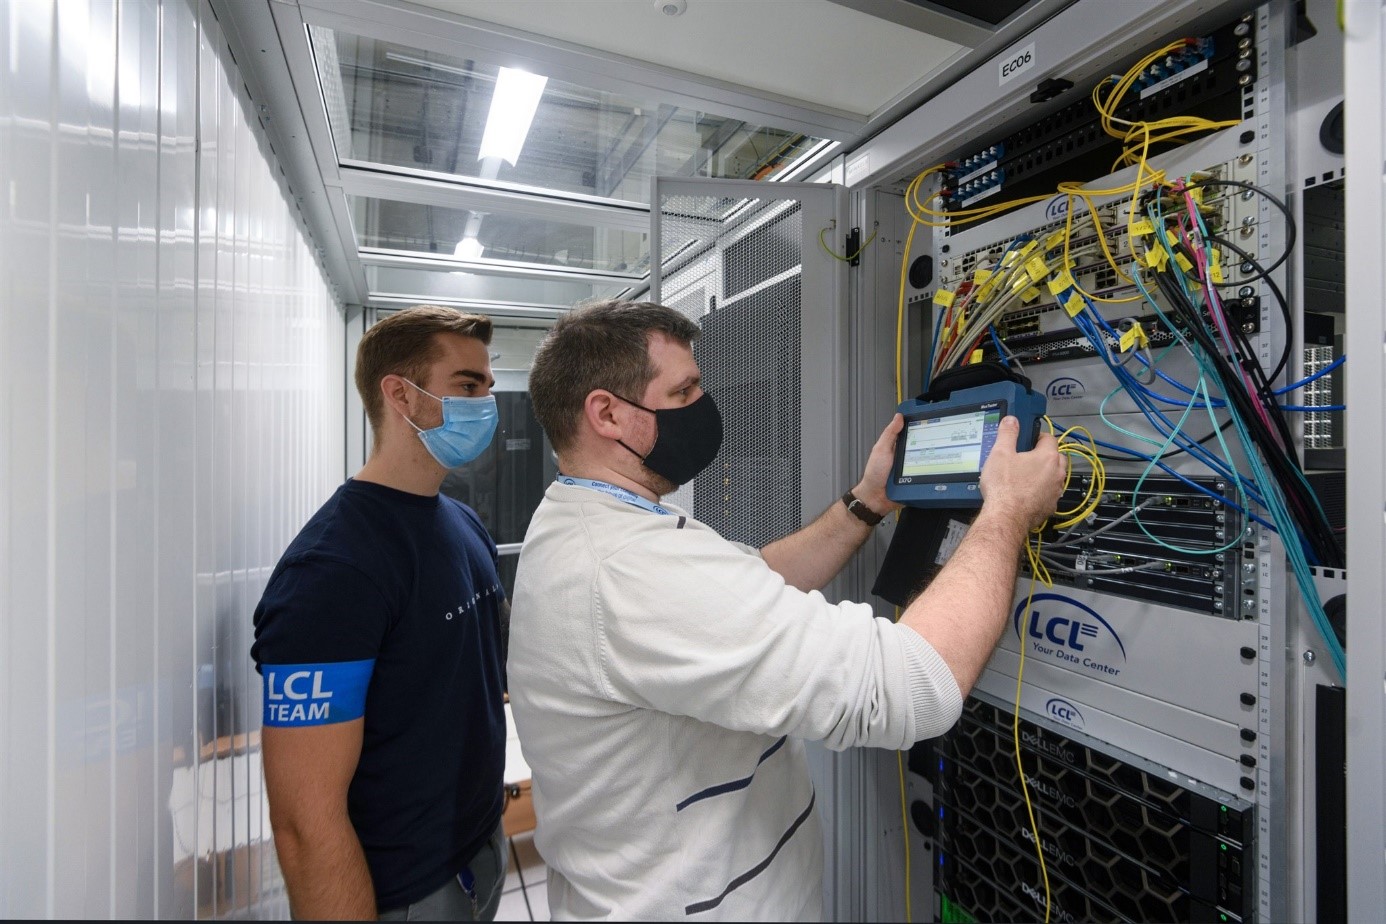 LCL Data Centers automates the measurements of fiber networks